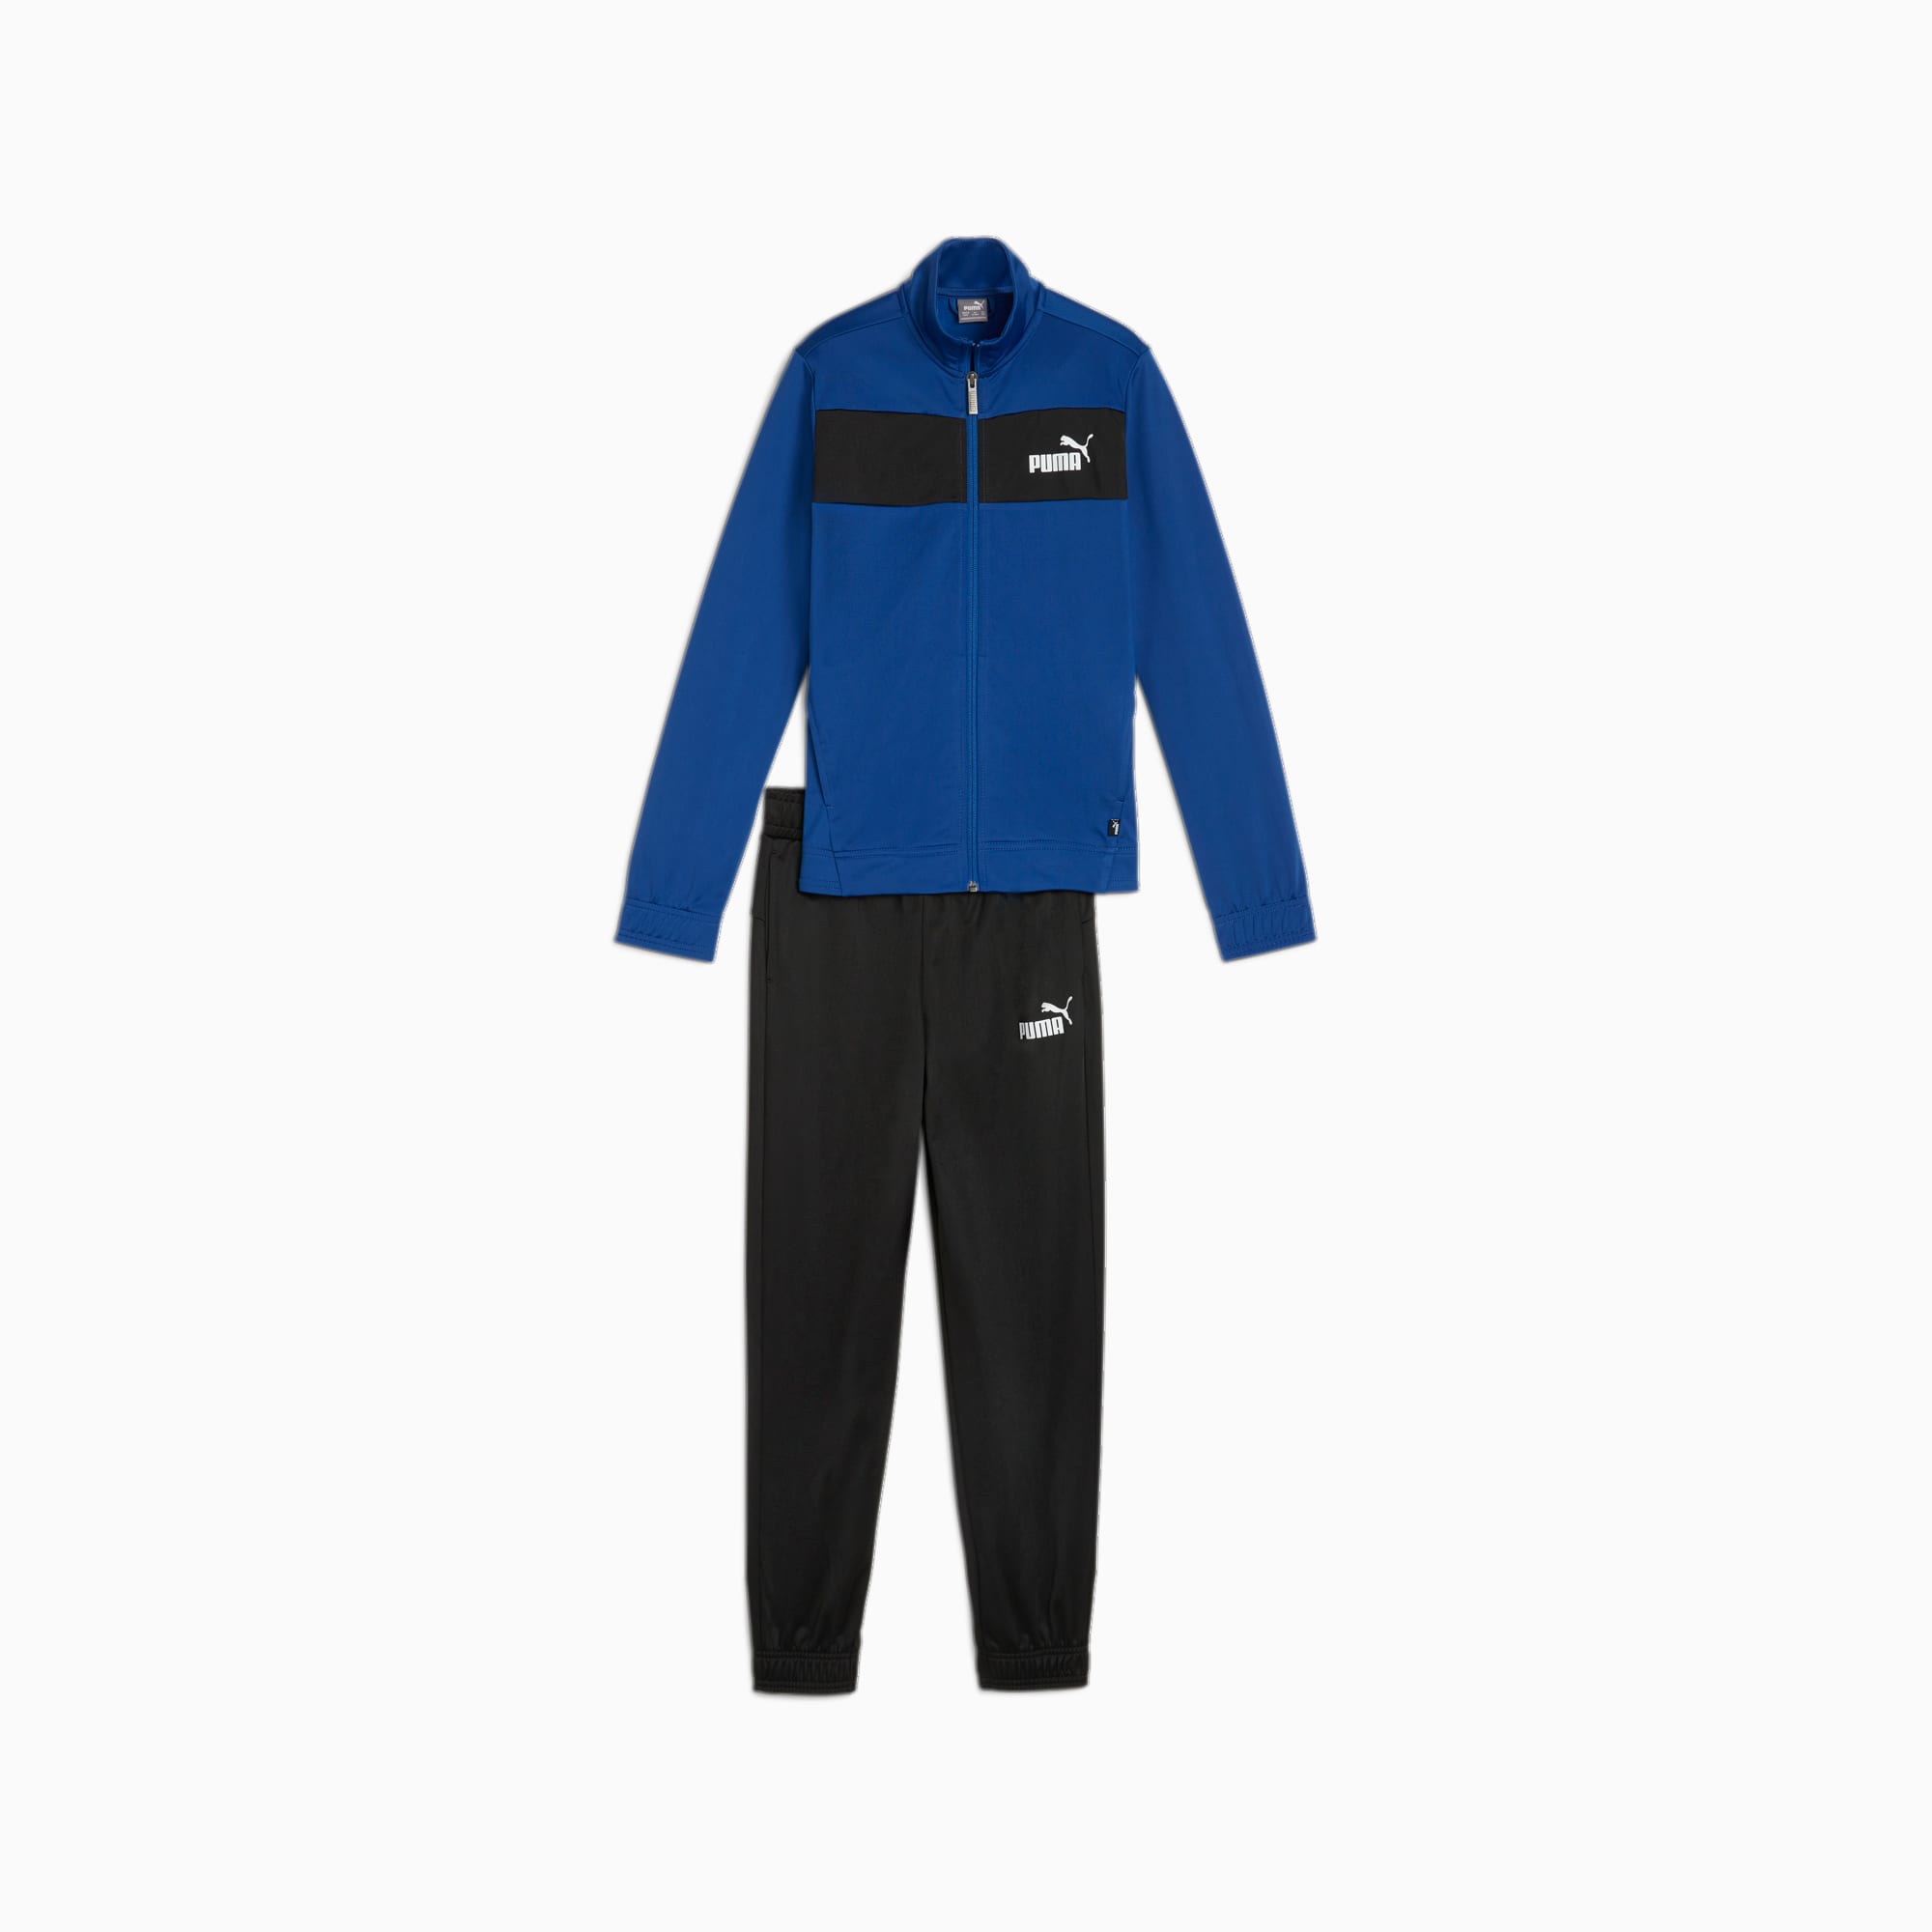 PUMA Jugend-Trainingsanzug Aus Polyester Für Kinder, Blau, Größe: 140, Kleidung